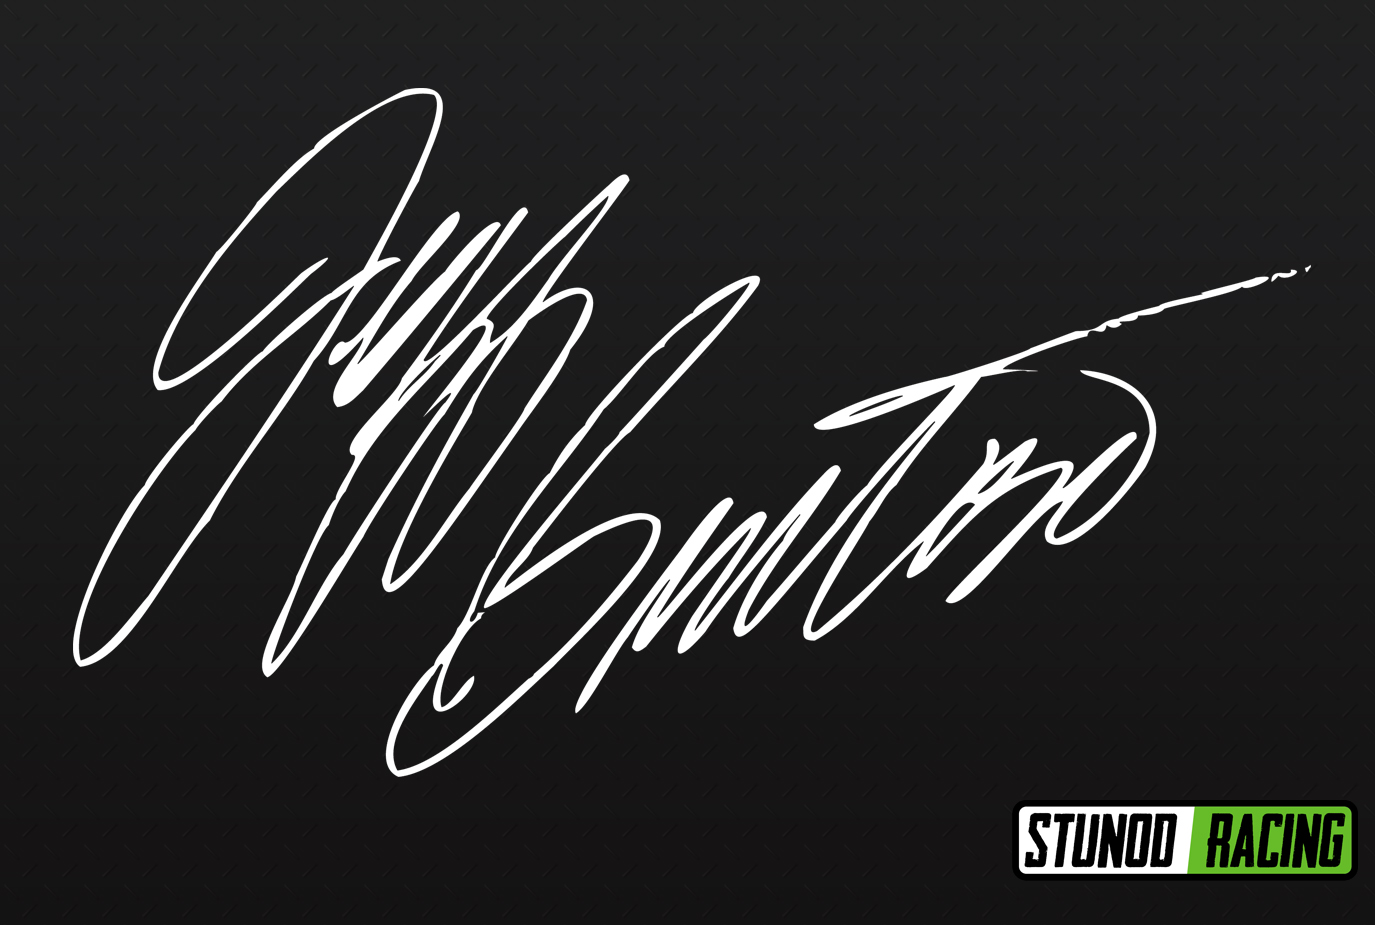 StunodRacing-Jeff-Burton-Signature.jpg